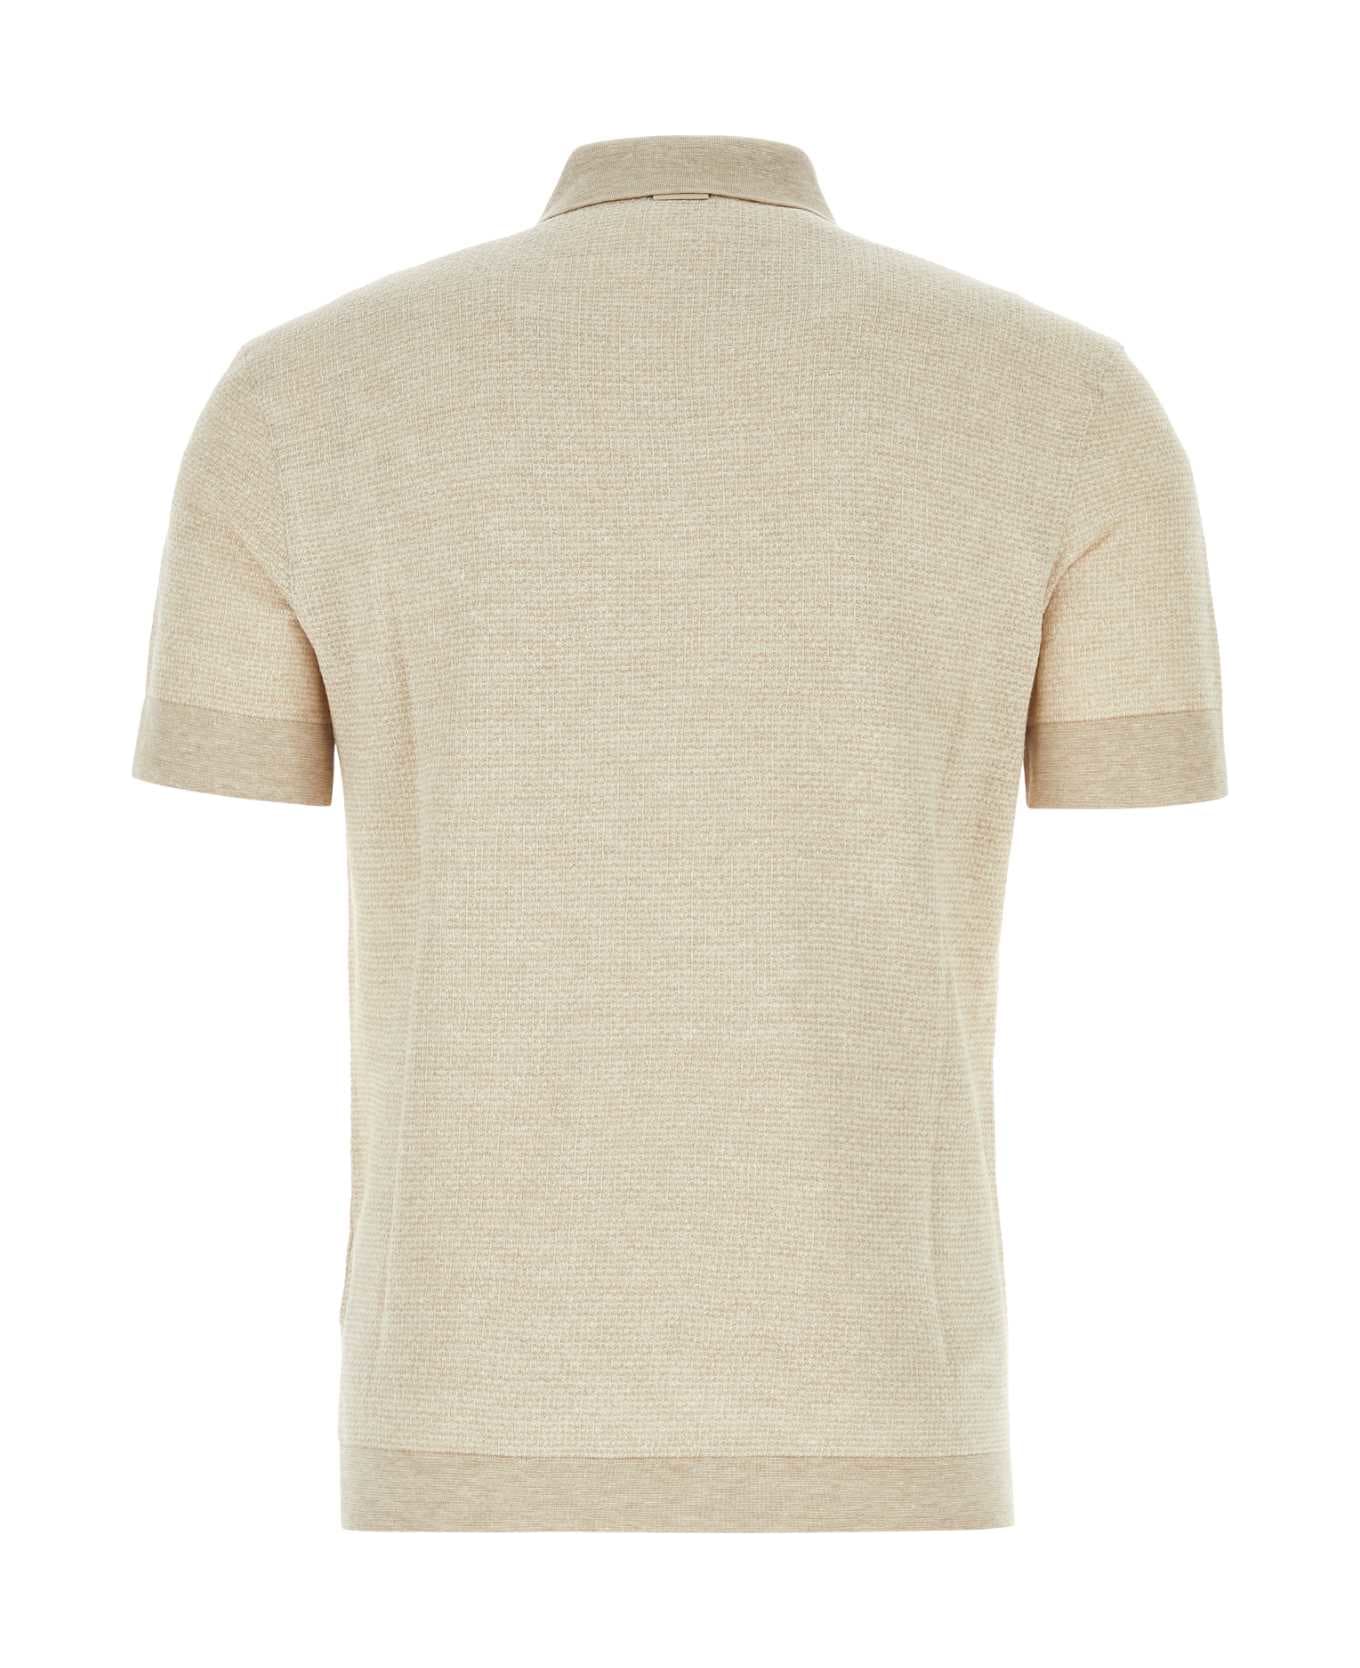 Zegna Sand Cotton Blend Polo Shirt - N03